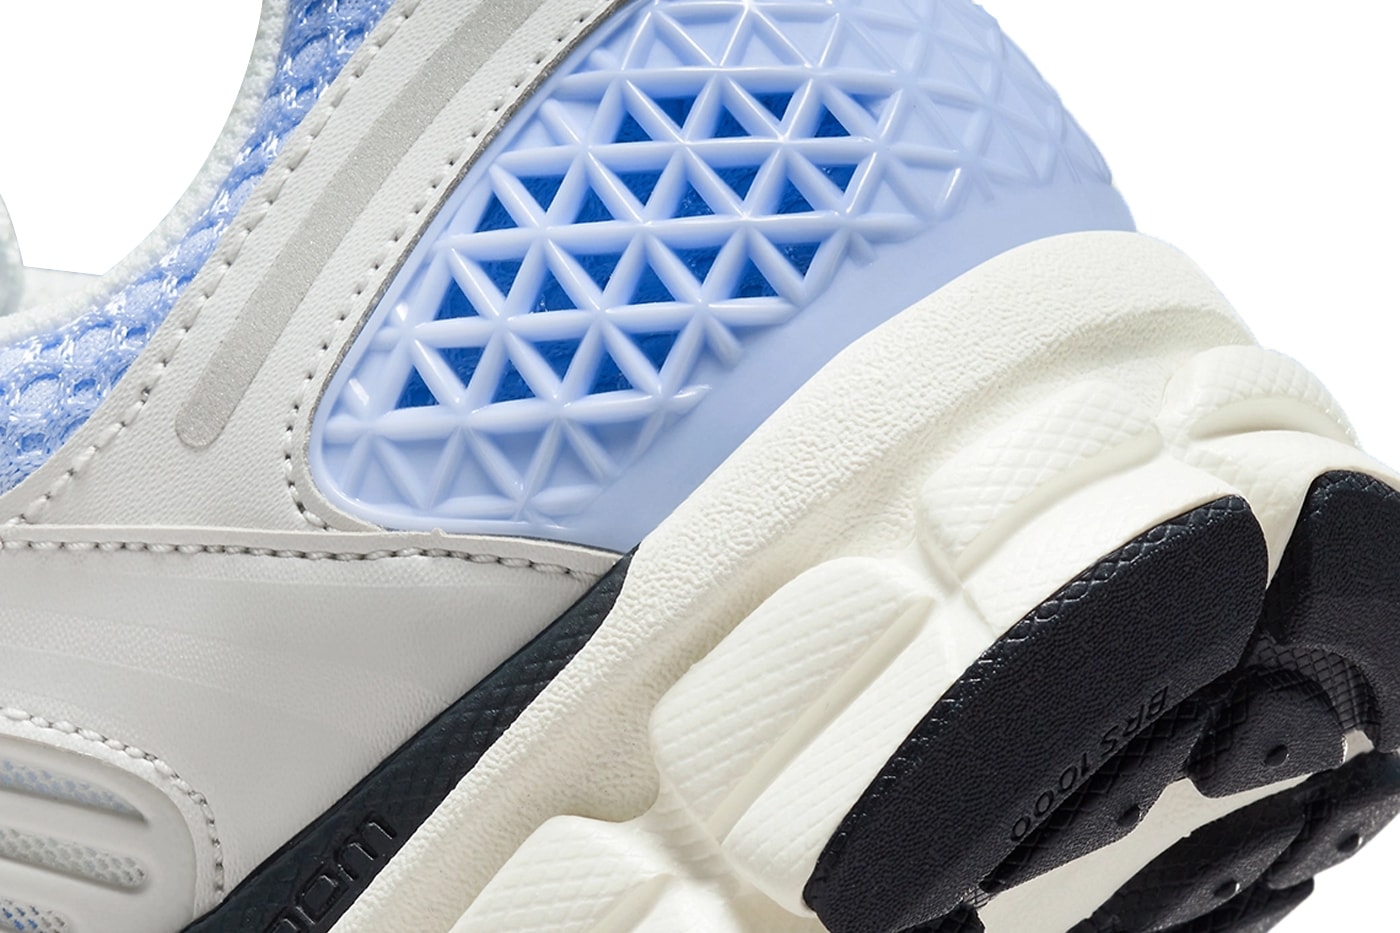 Nike Zoom Vomero 5 grey lavender release info date price beaverton bowerman series cream black white